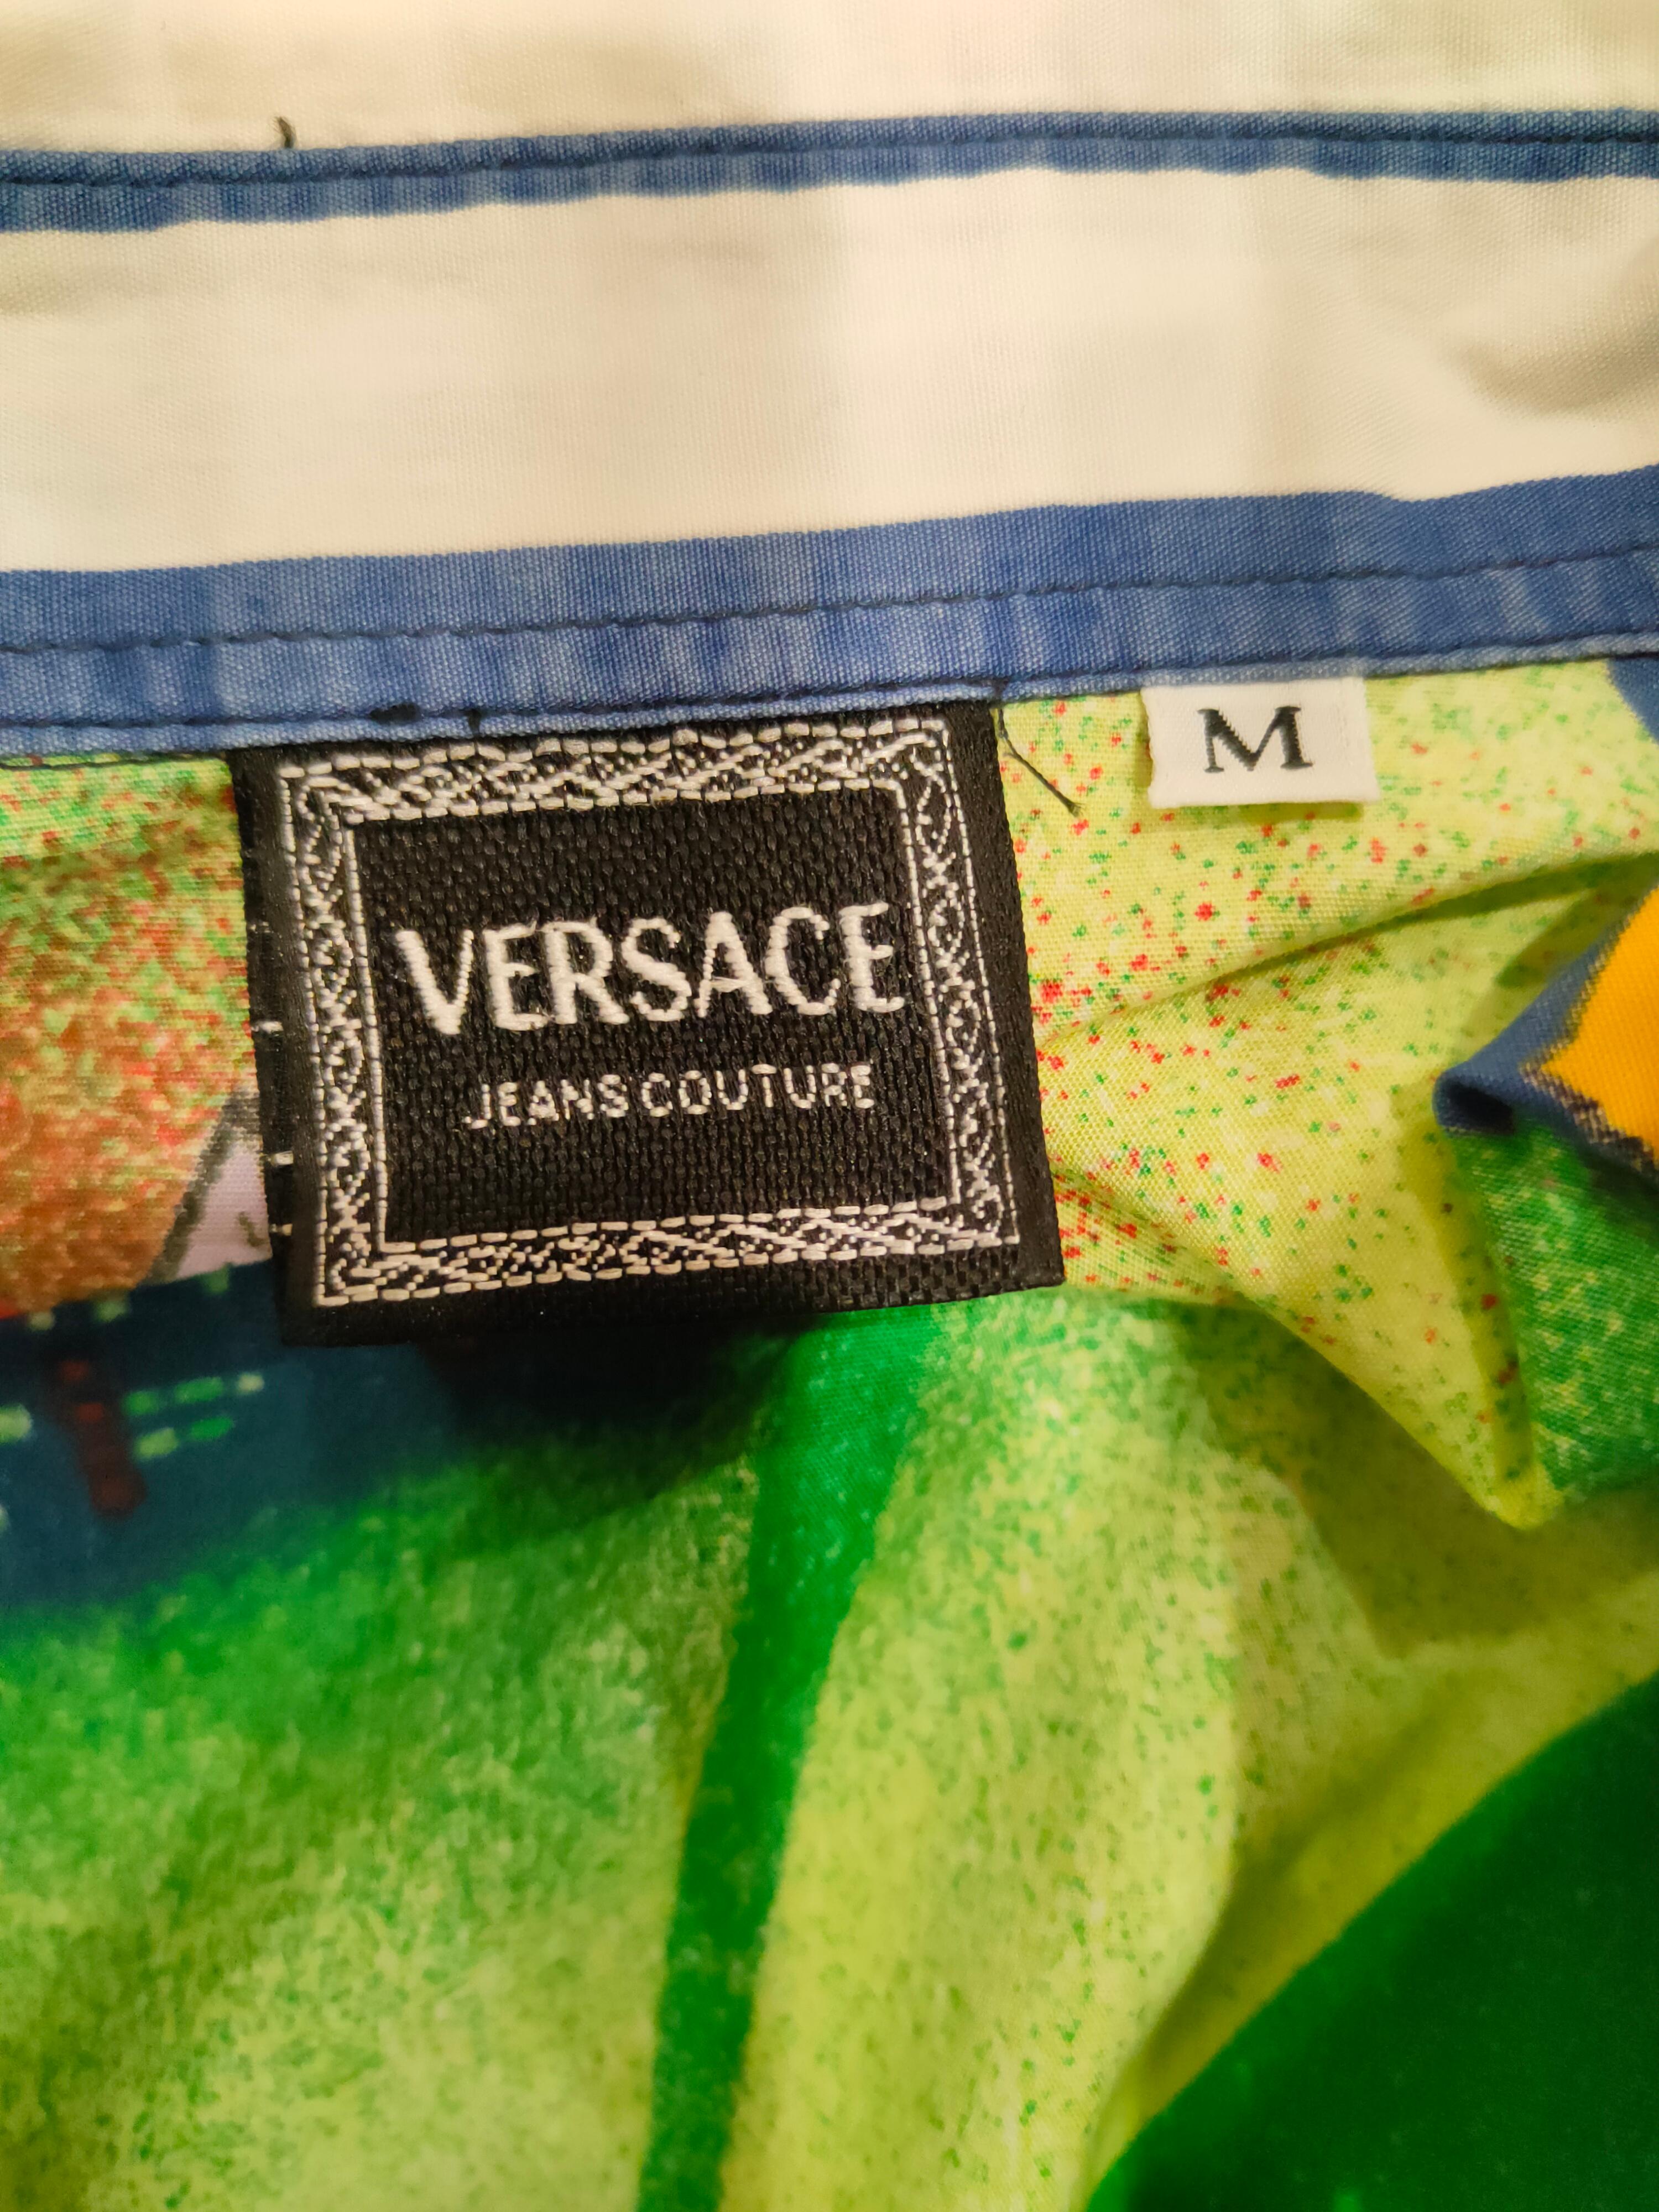 Men's Gianni Versace Jeans Couture New York Graffiti shirt